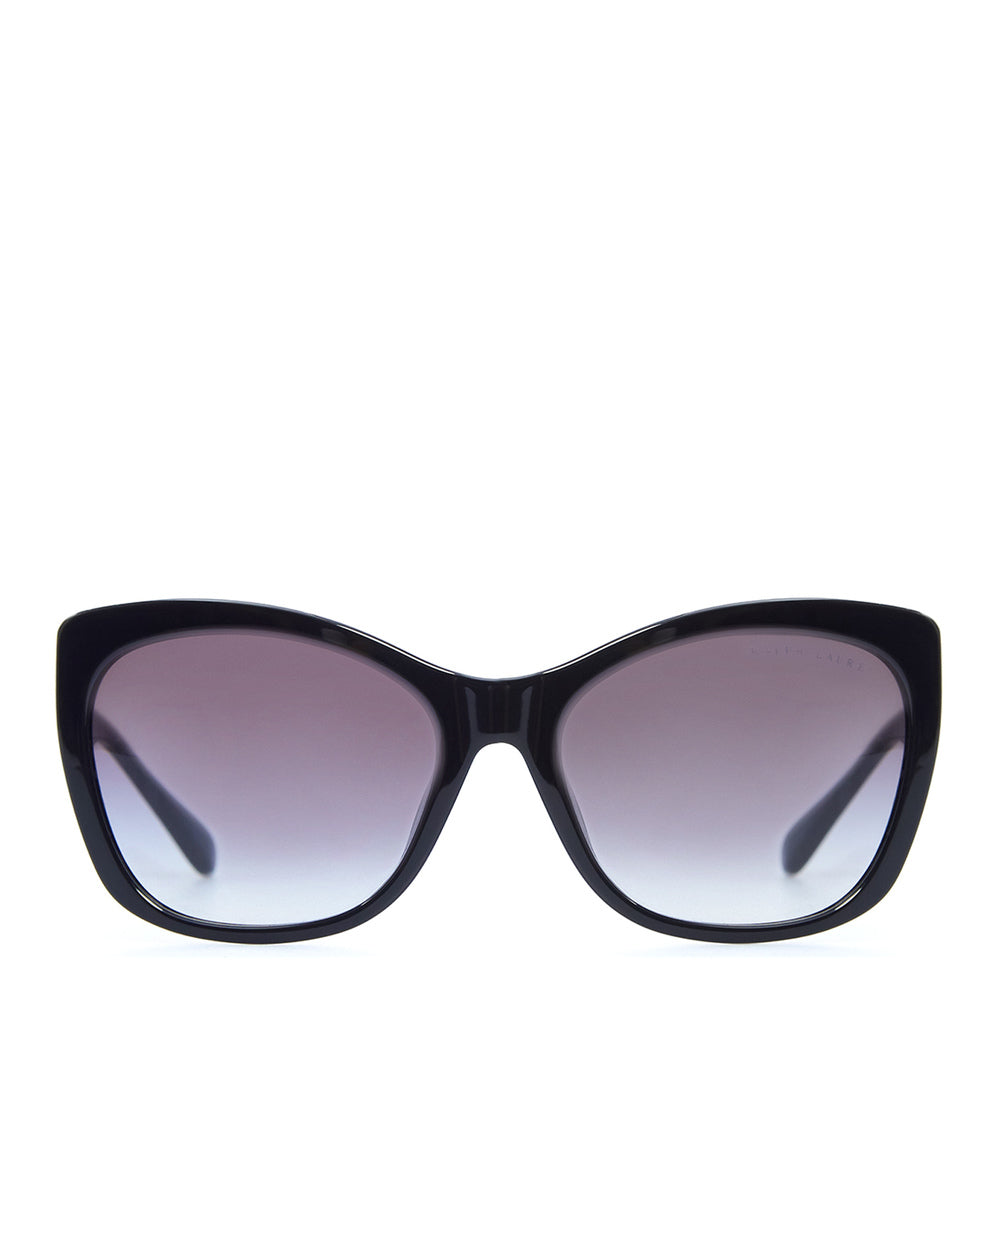 Ralph Lauren Women's Sunglasses Butterfly Black RL819250018G